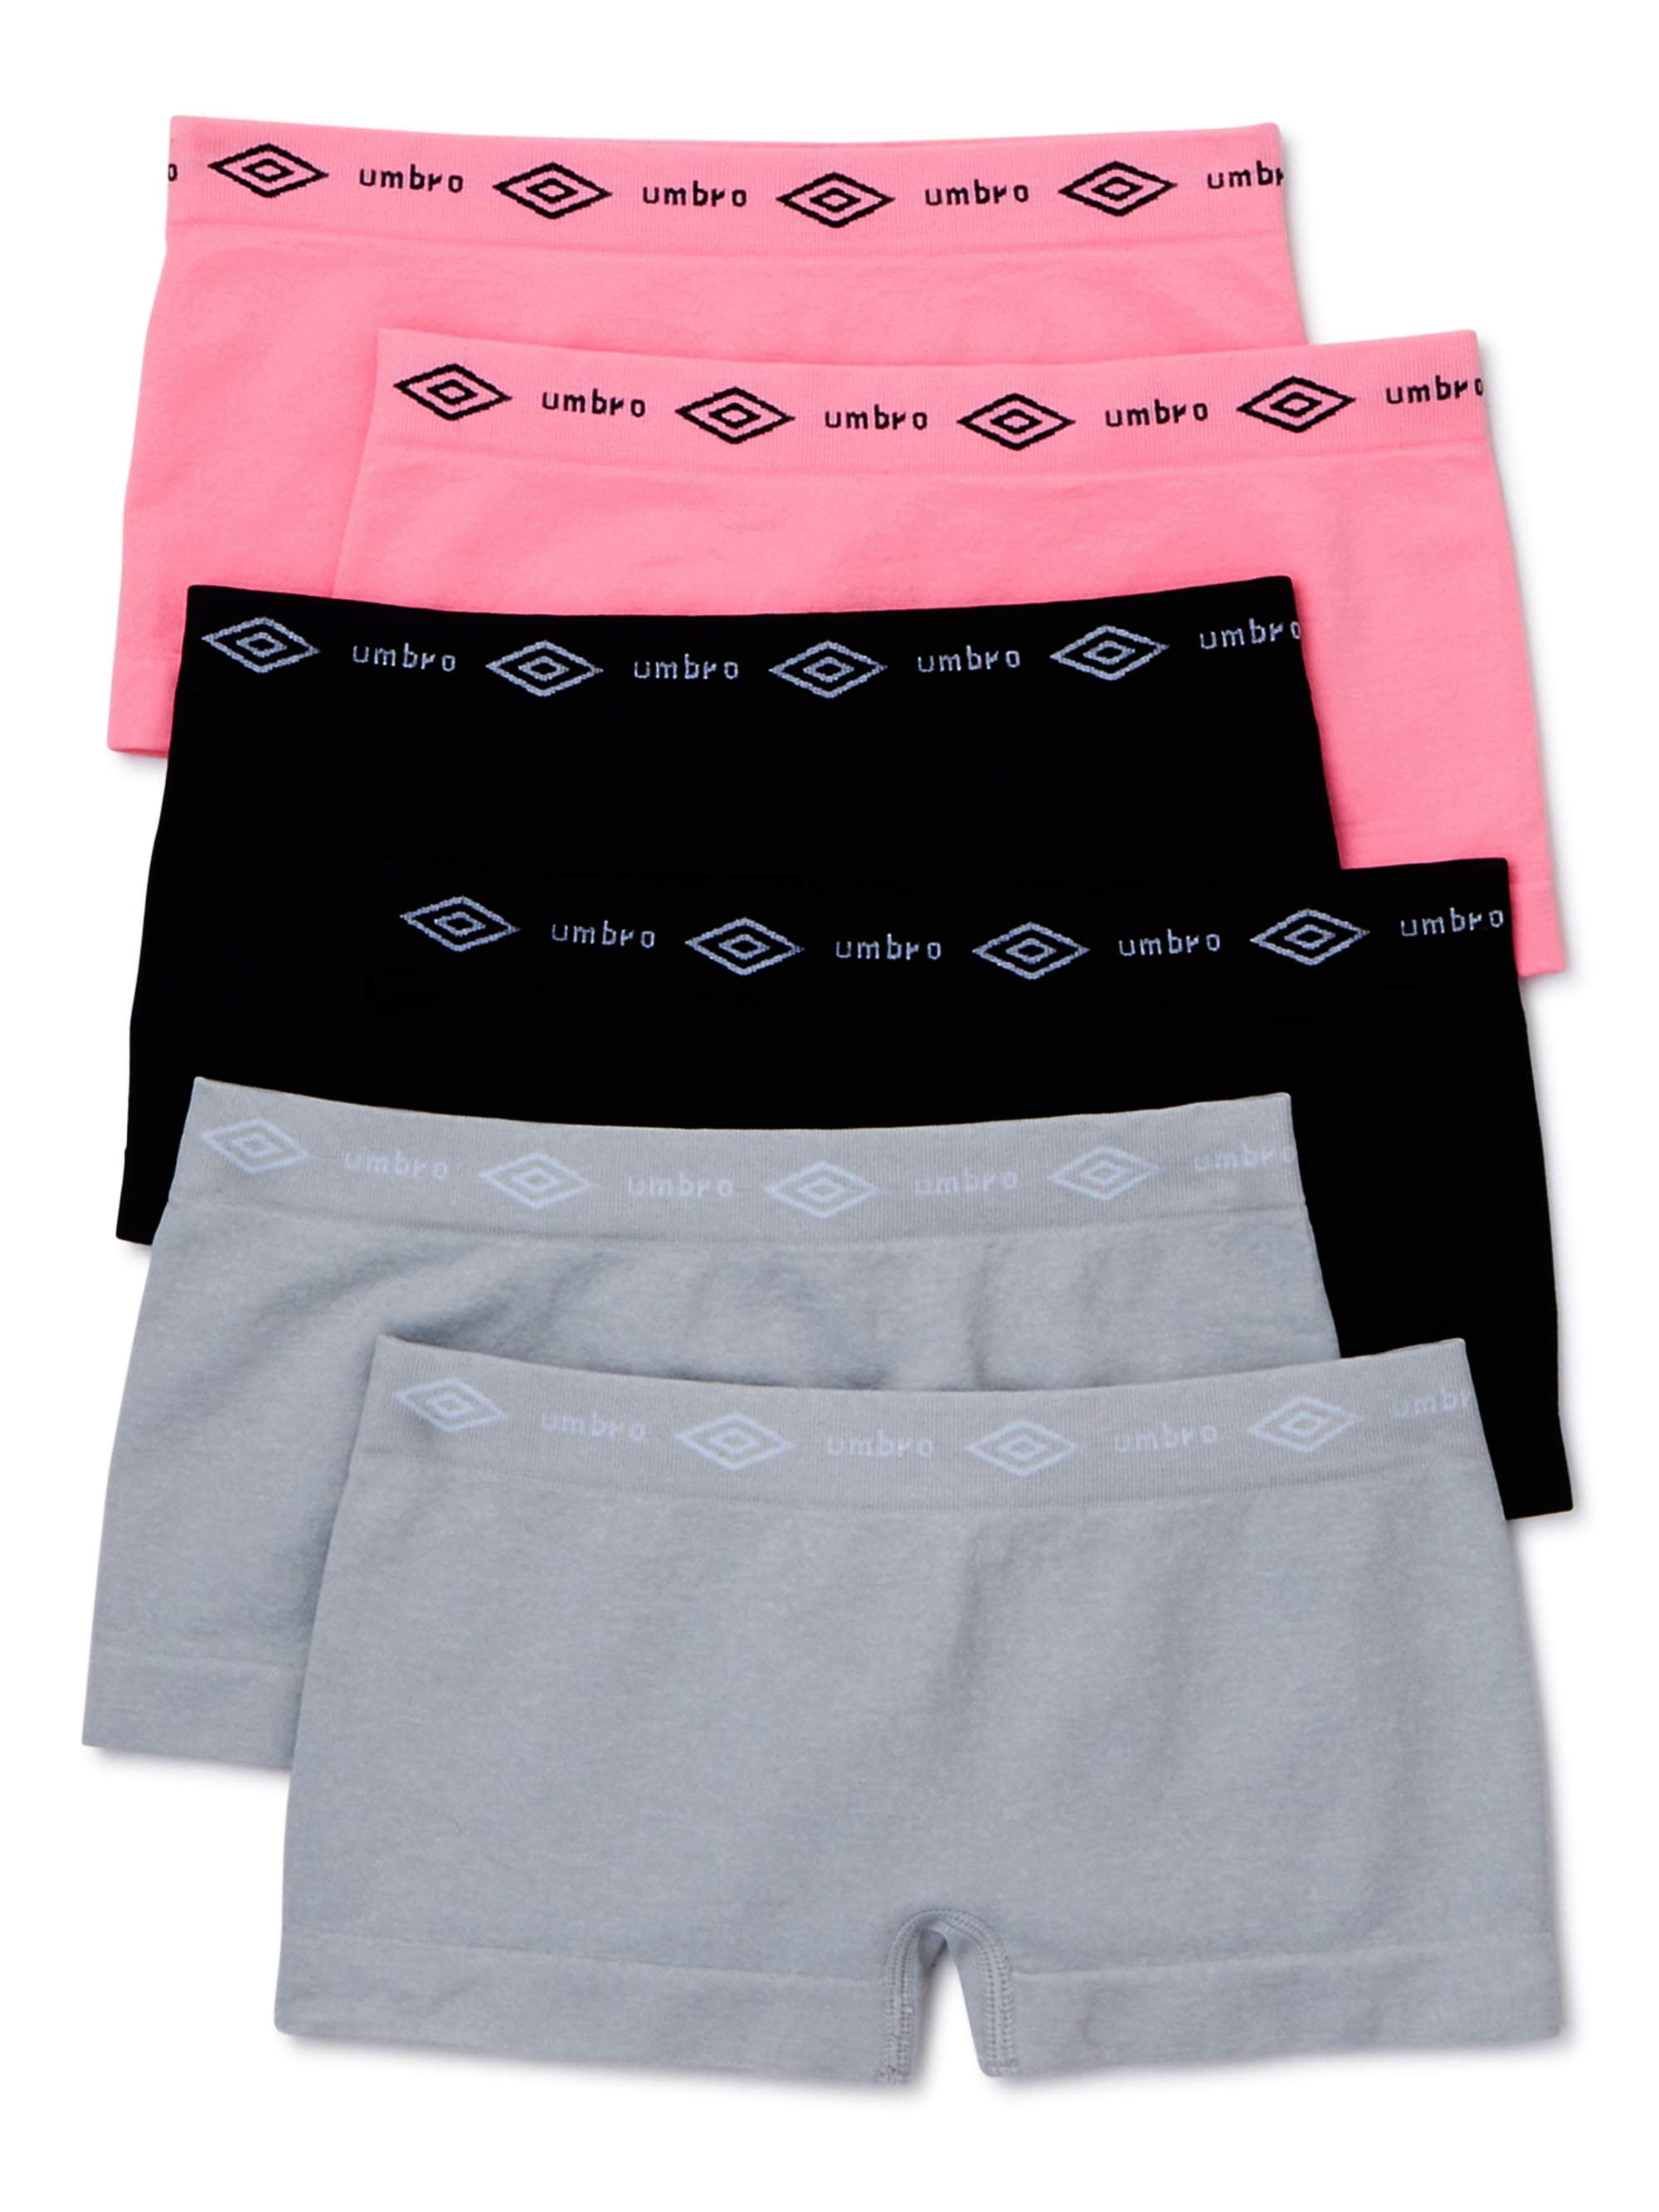 Umbro - Umbro Girls Underwear, 6 Pack Seamless Boy Short Panties, Sizes